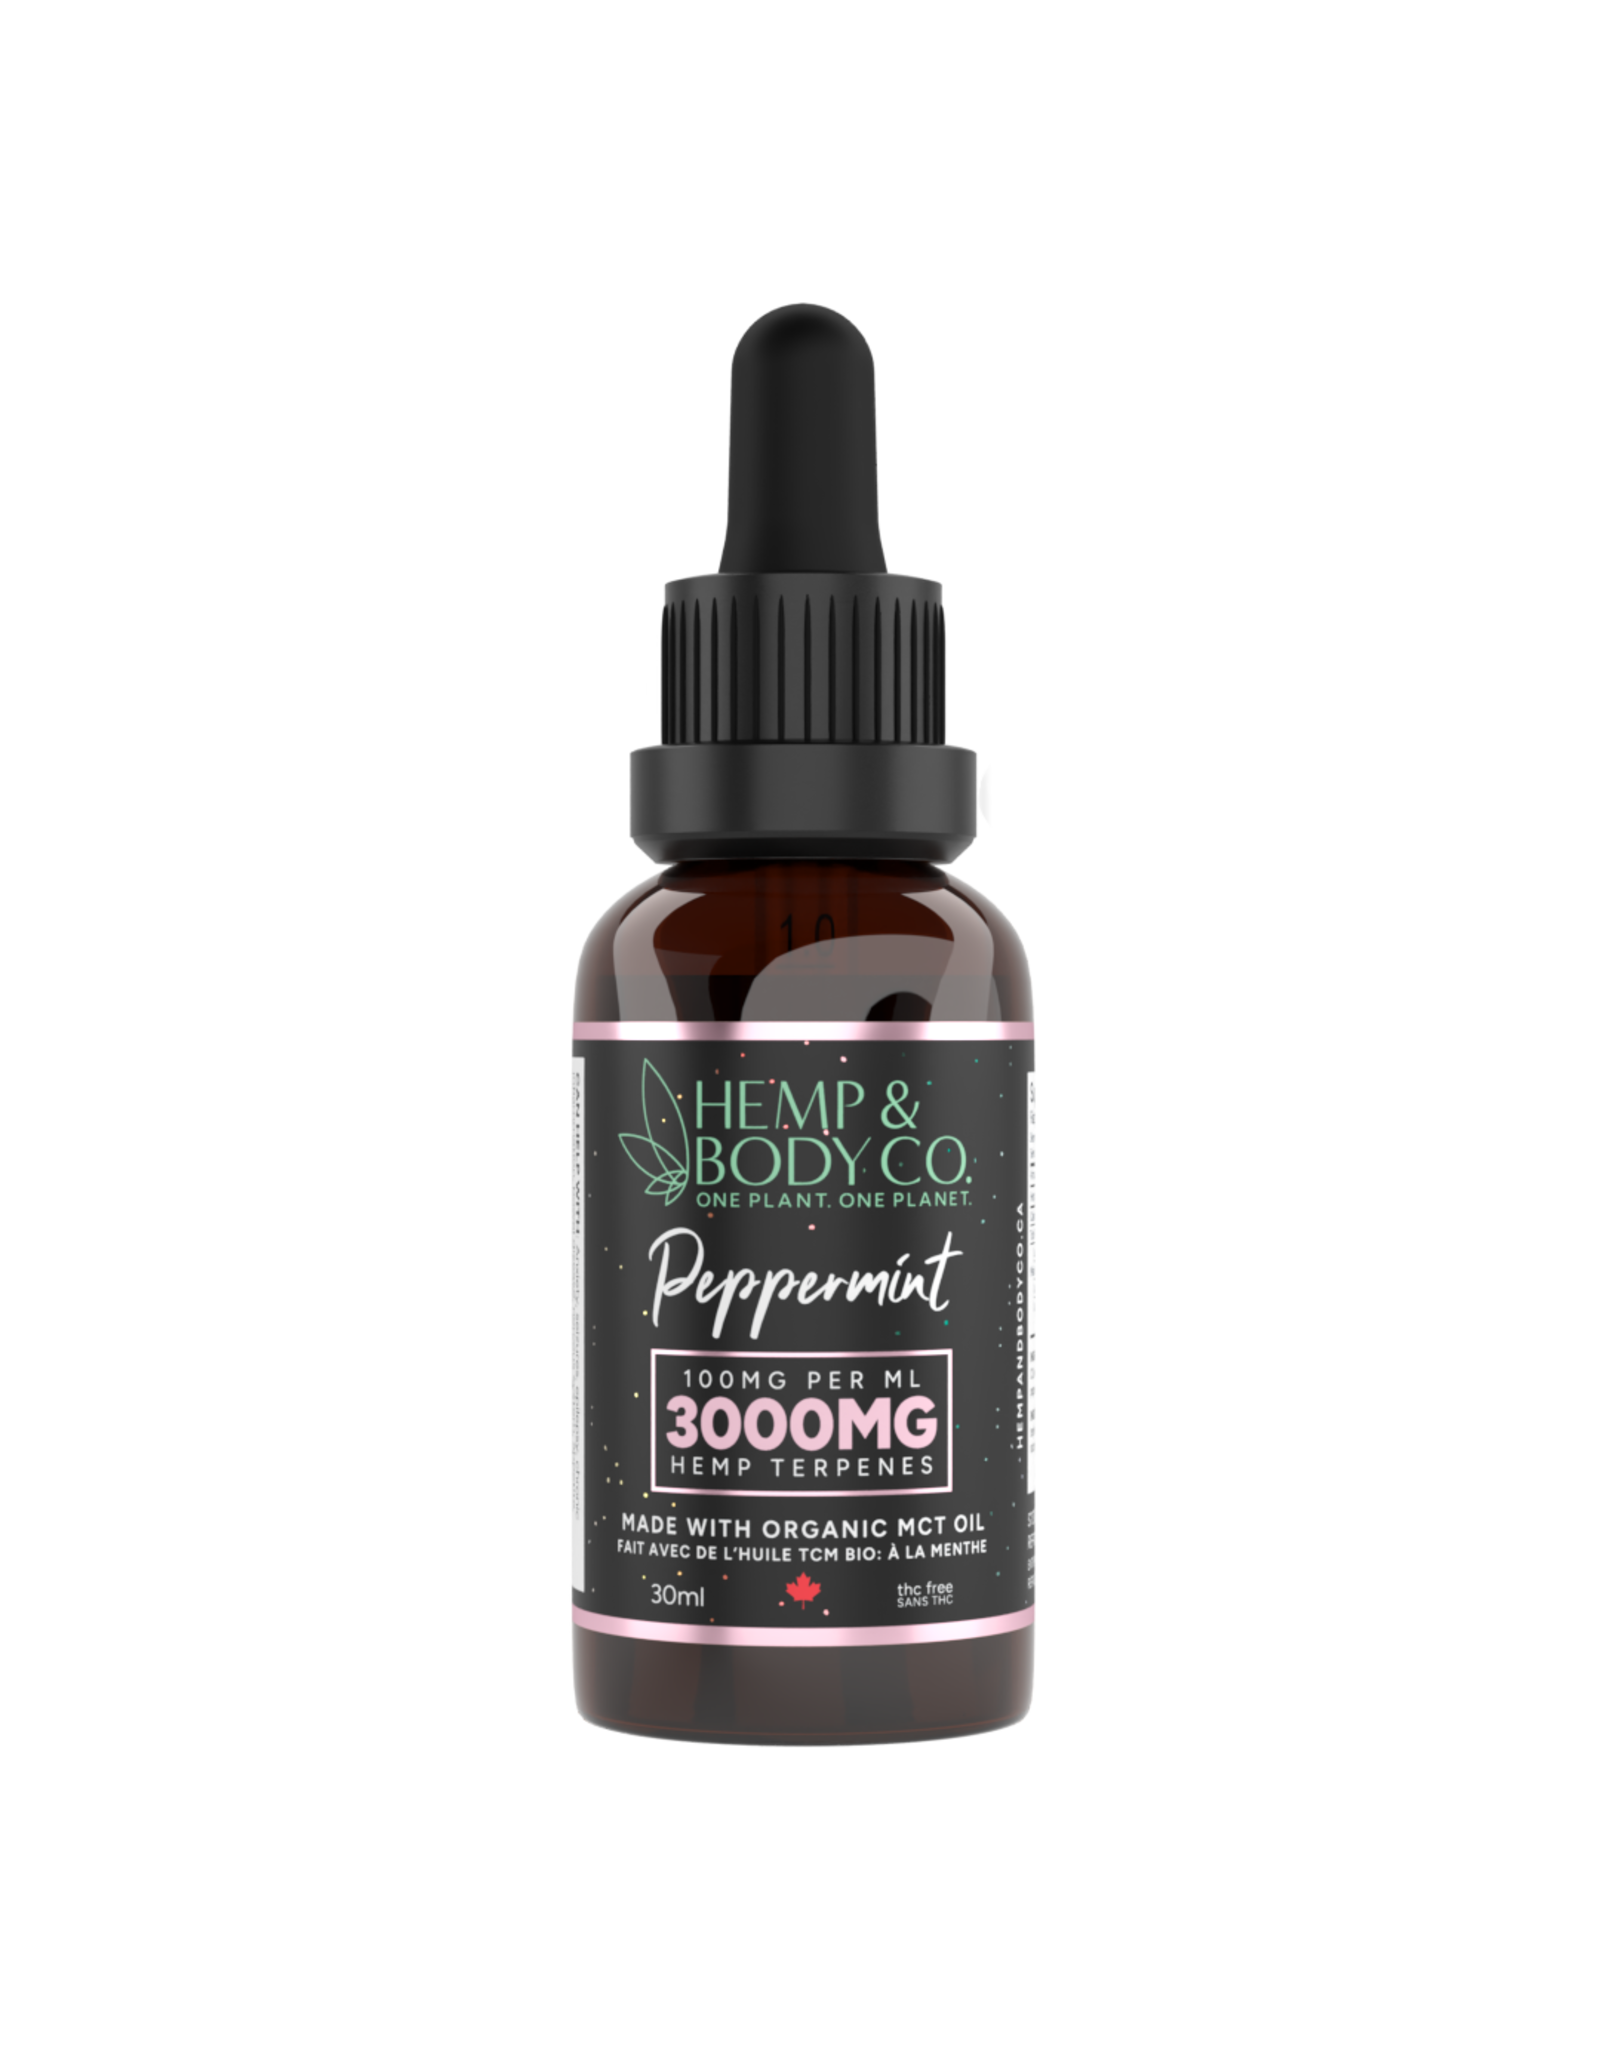 Hemp & Body Co. Peppermint Tincture (MCT Oil) - 30ml - 3000MG